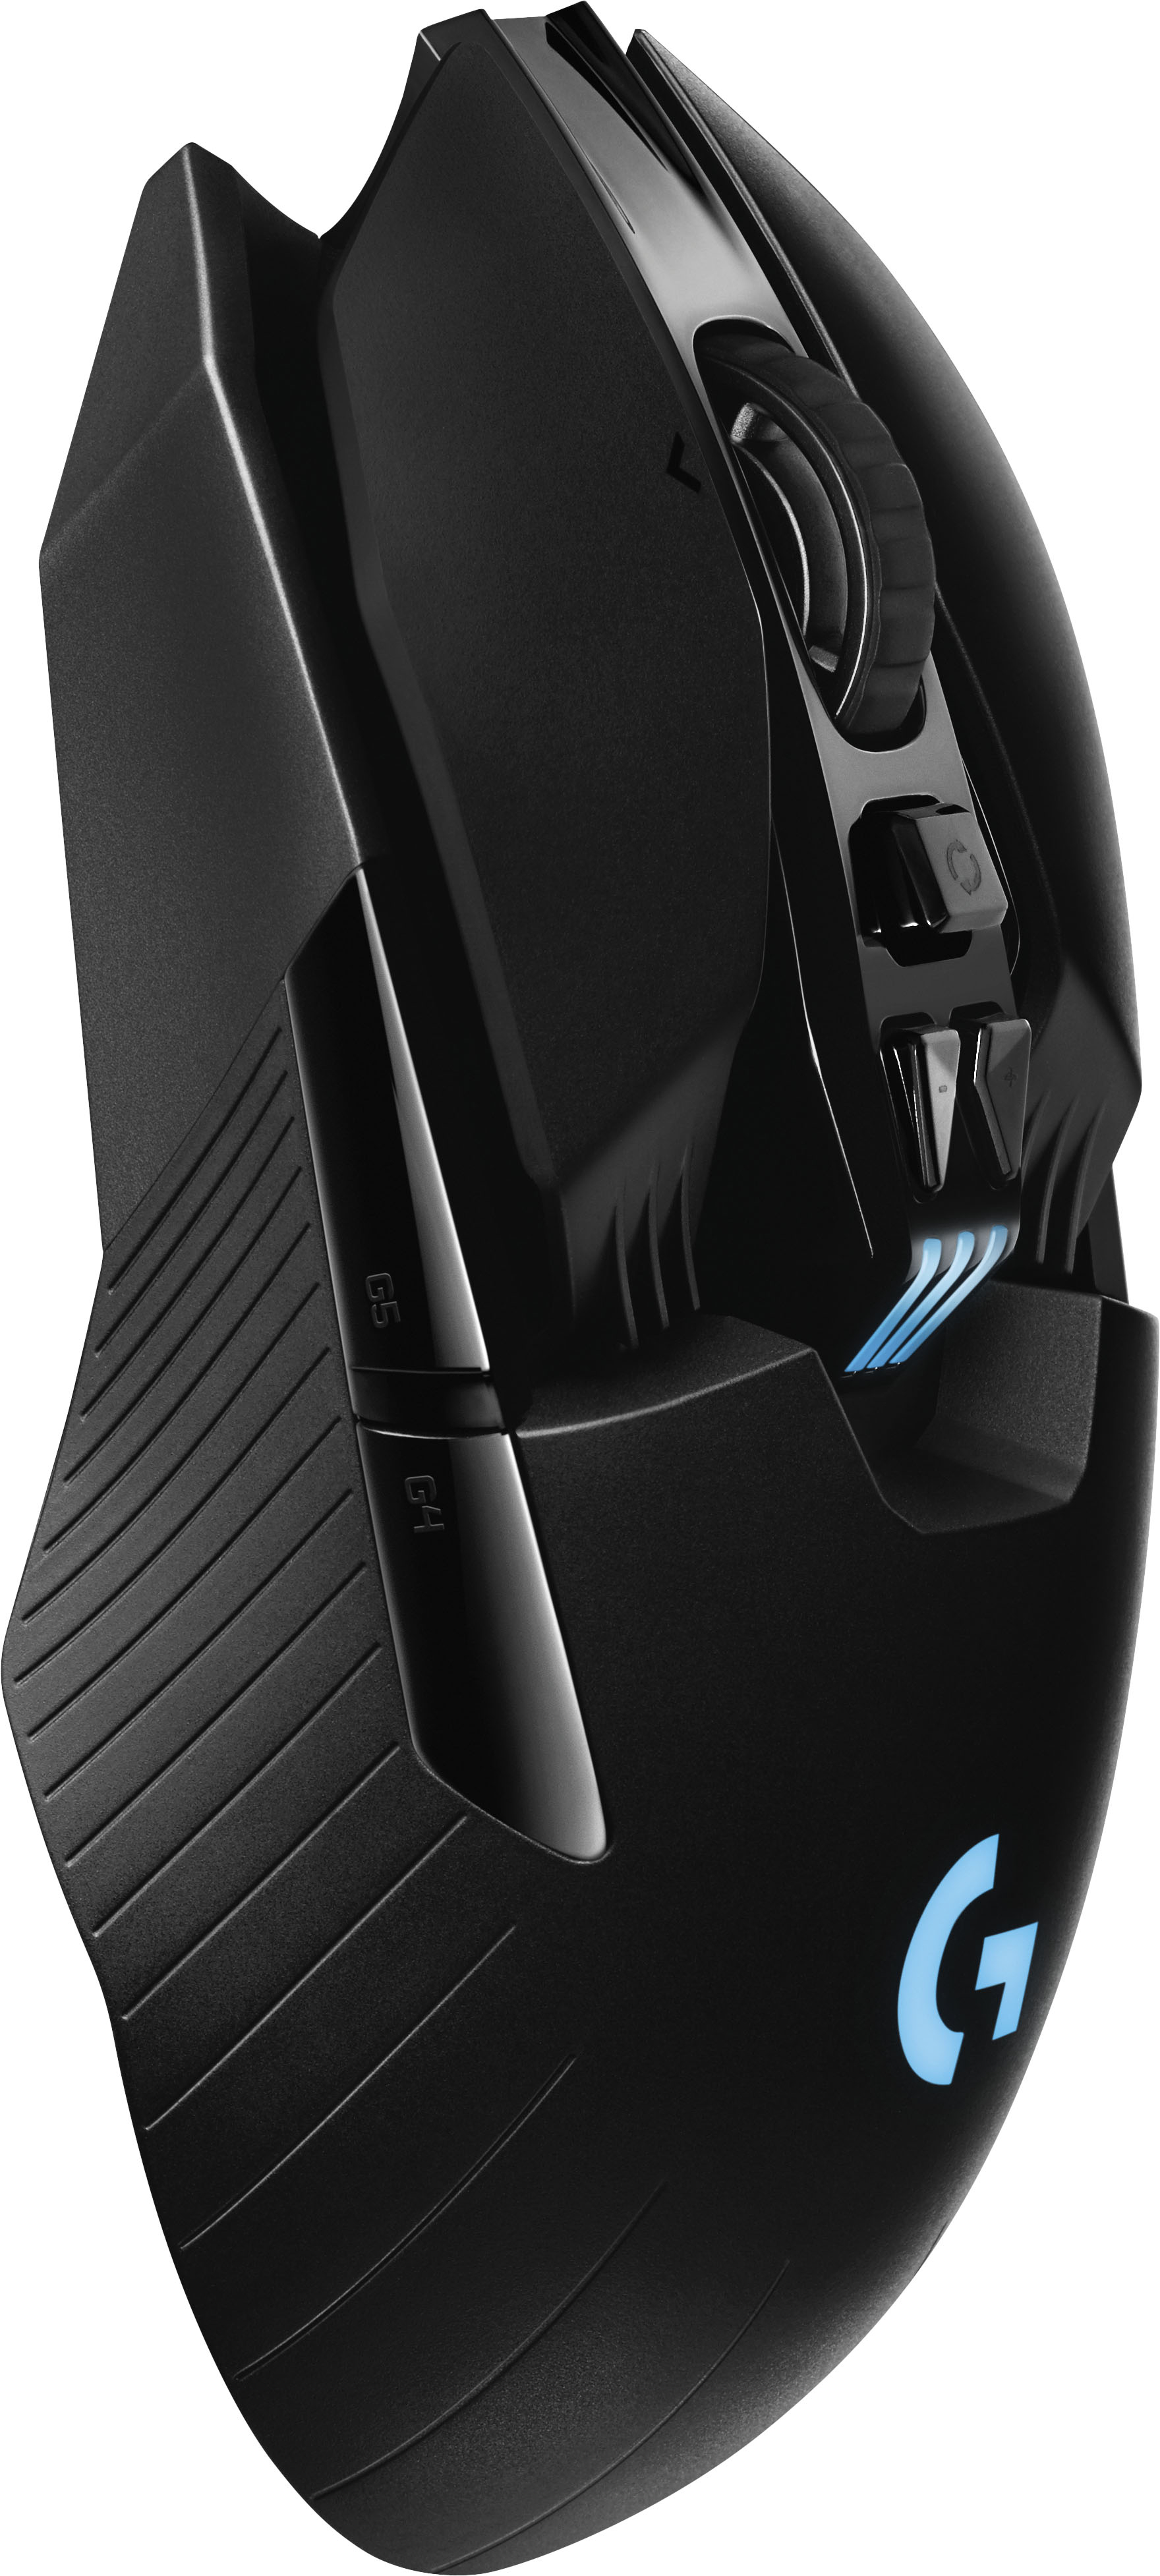 Logitech G903 LIGHTSPEED Wireless Gaming Mouse with HERO Sensor, OB